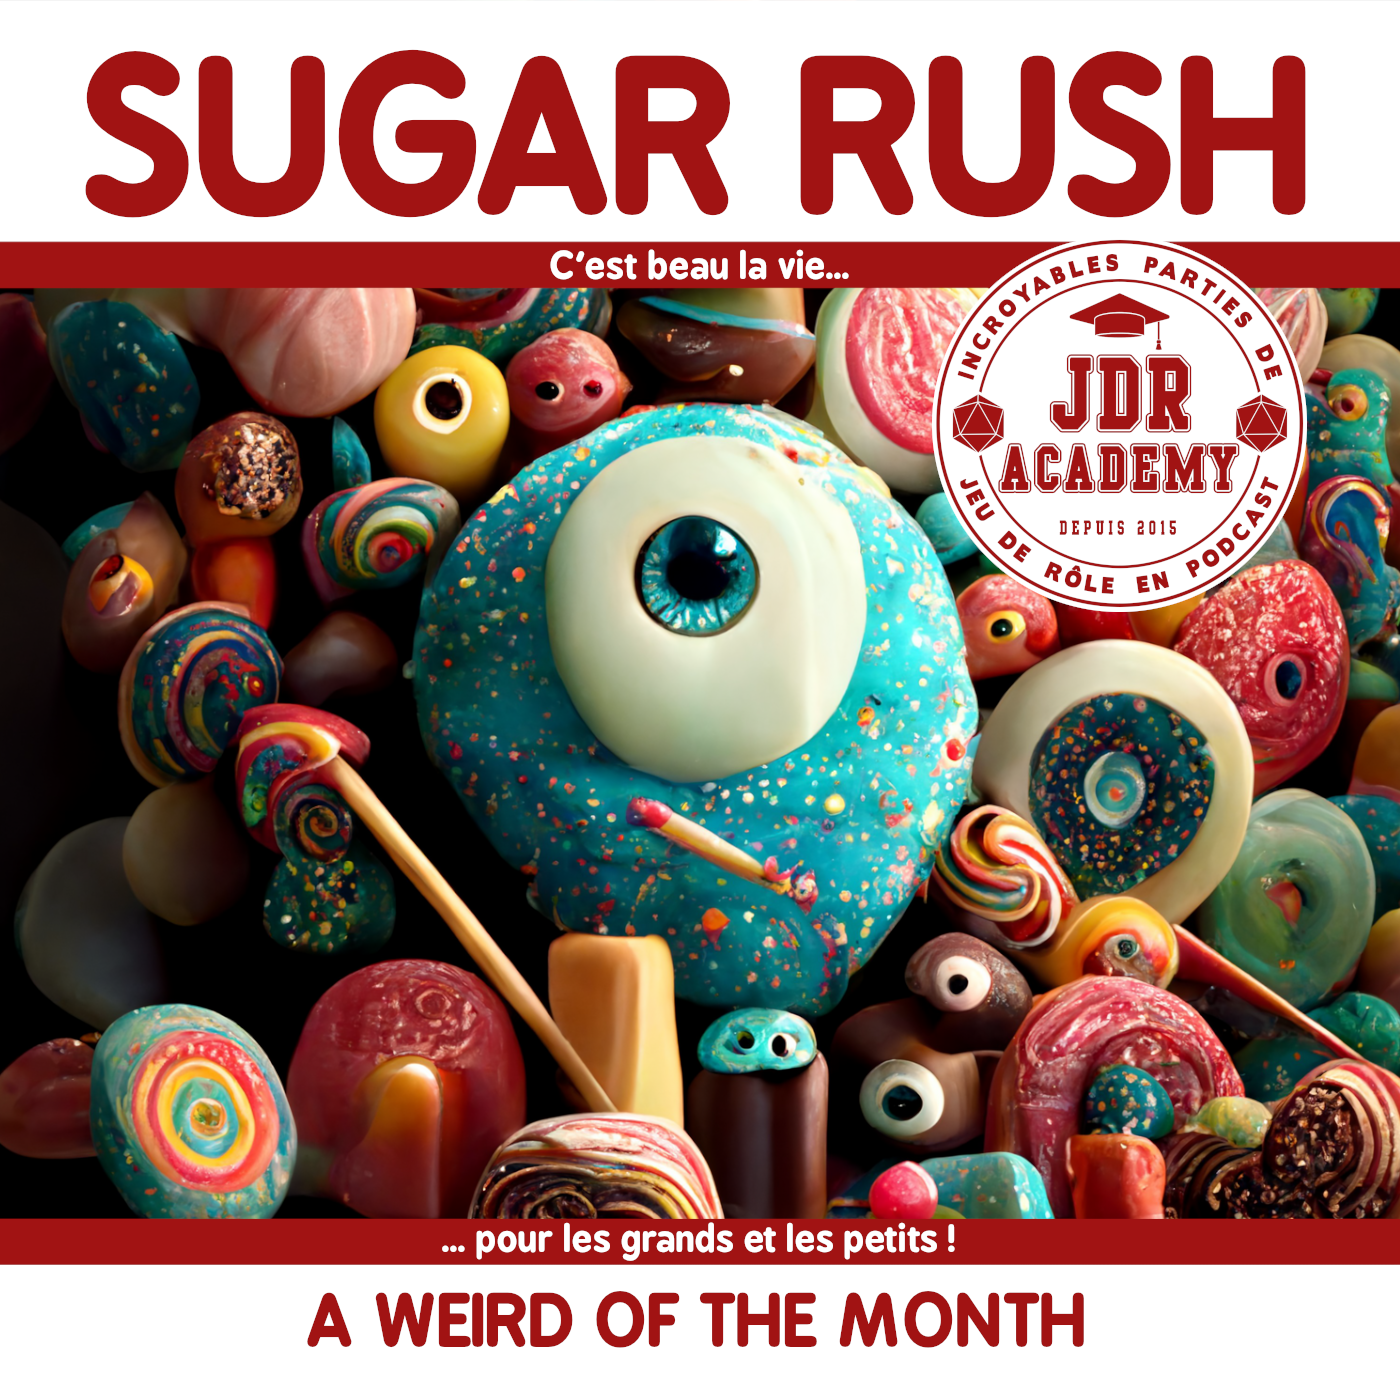 Sugar Rush (a weird of the month)